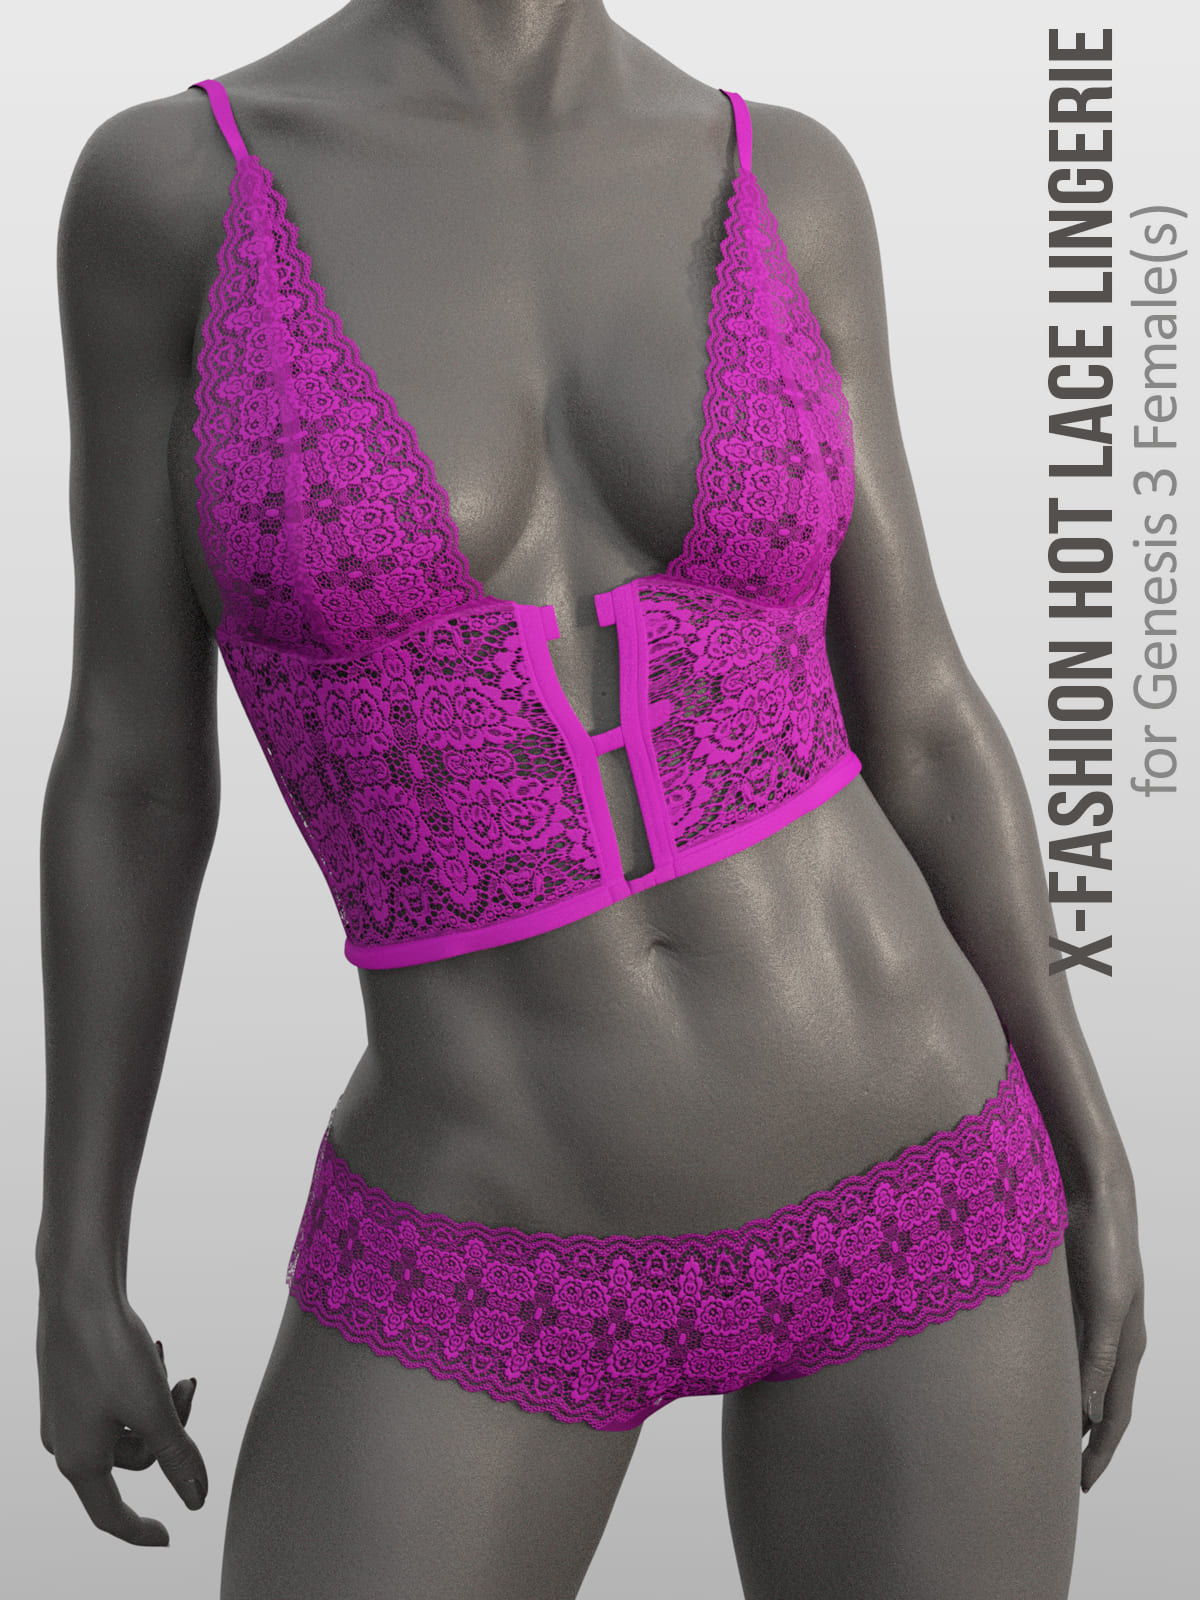 X-Fashion Hot Lace Lingerie for Genesis 8 Females - DAZ3DDL image